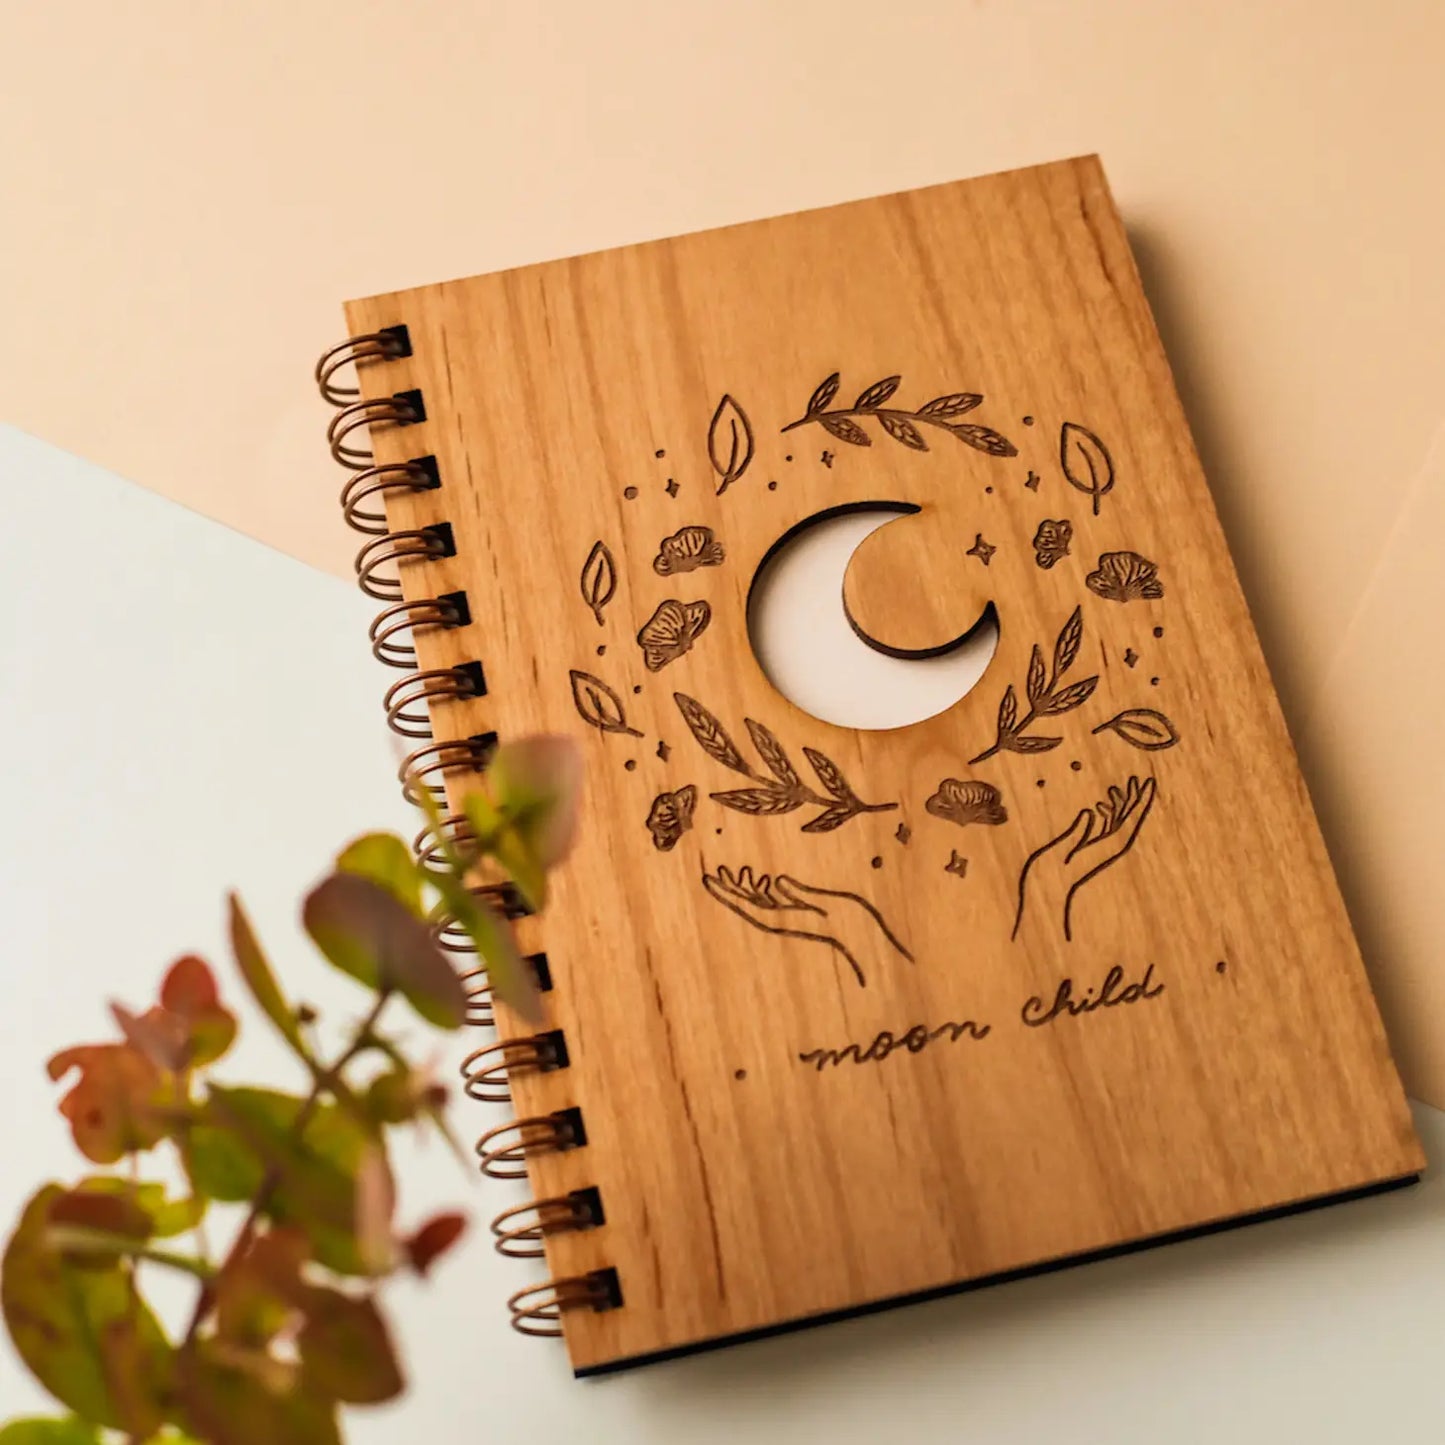 Moon Child Wood Journal